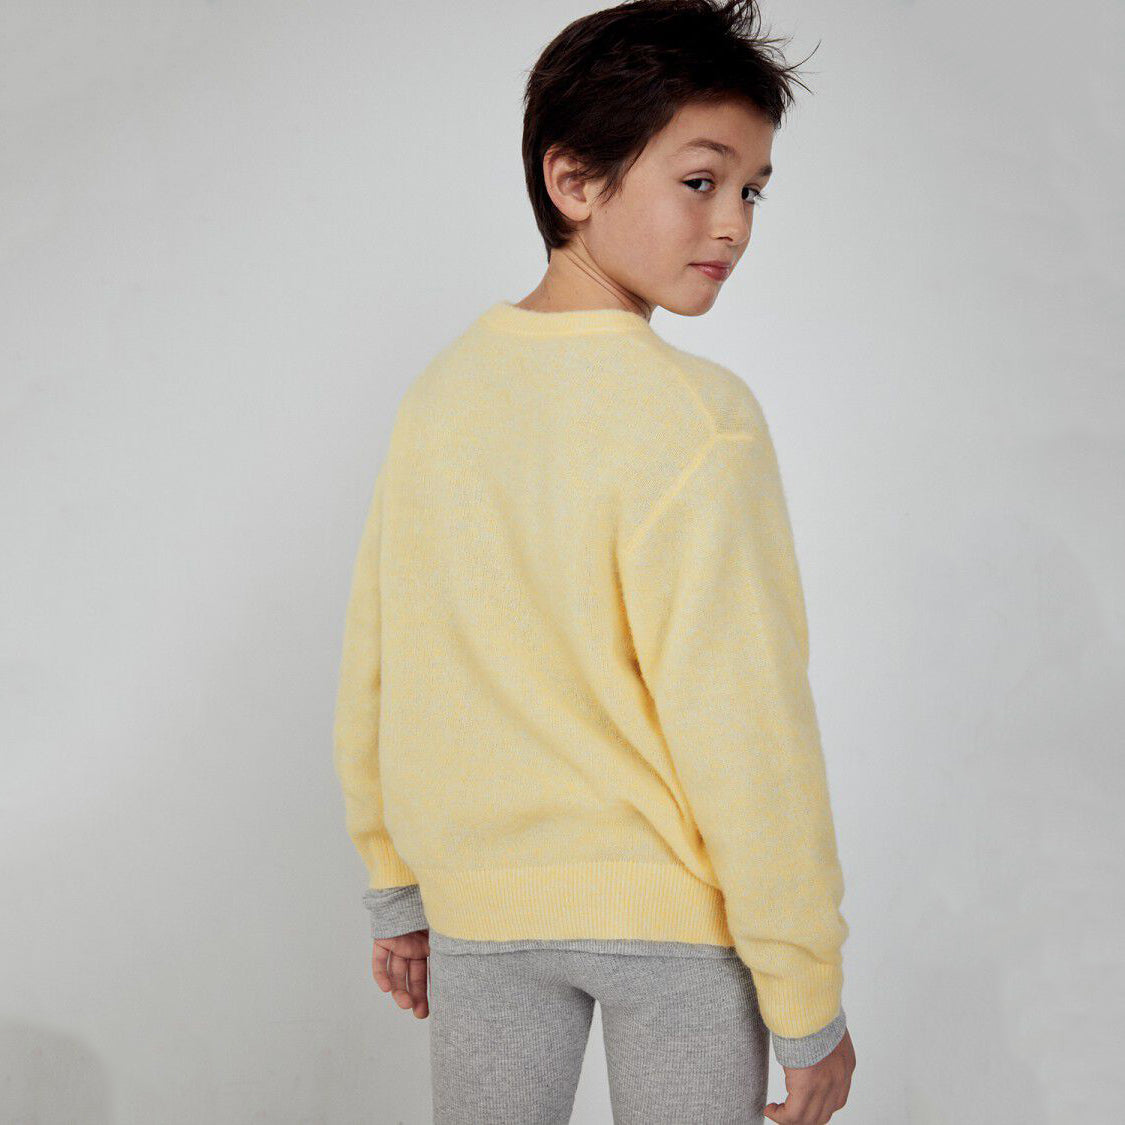 Boys & Girls Yelllow Wool Sweater